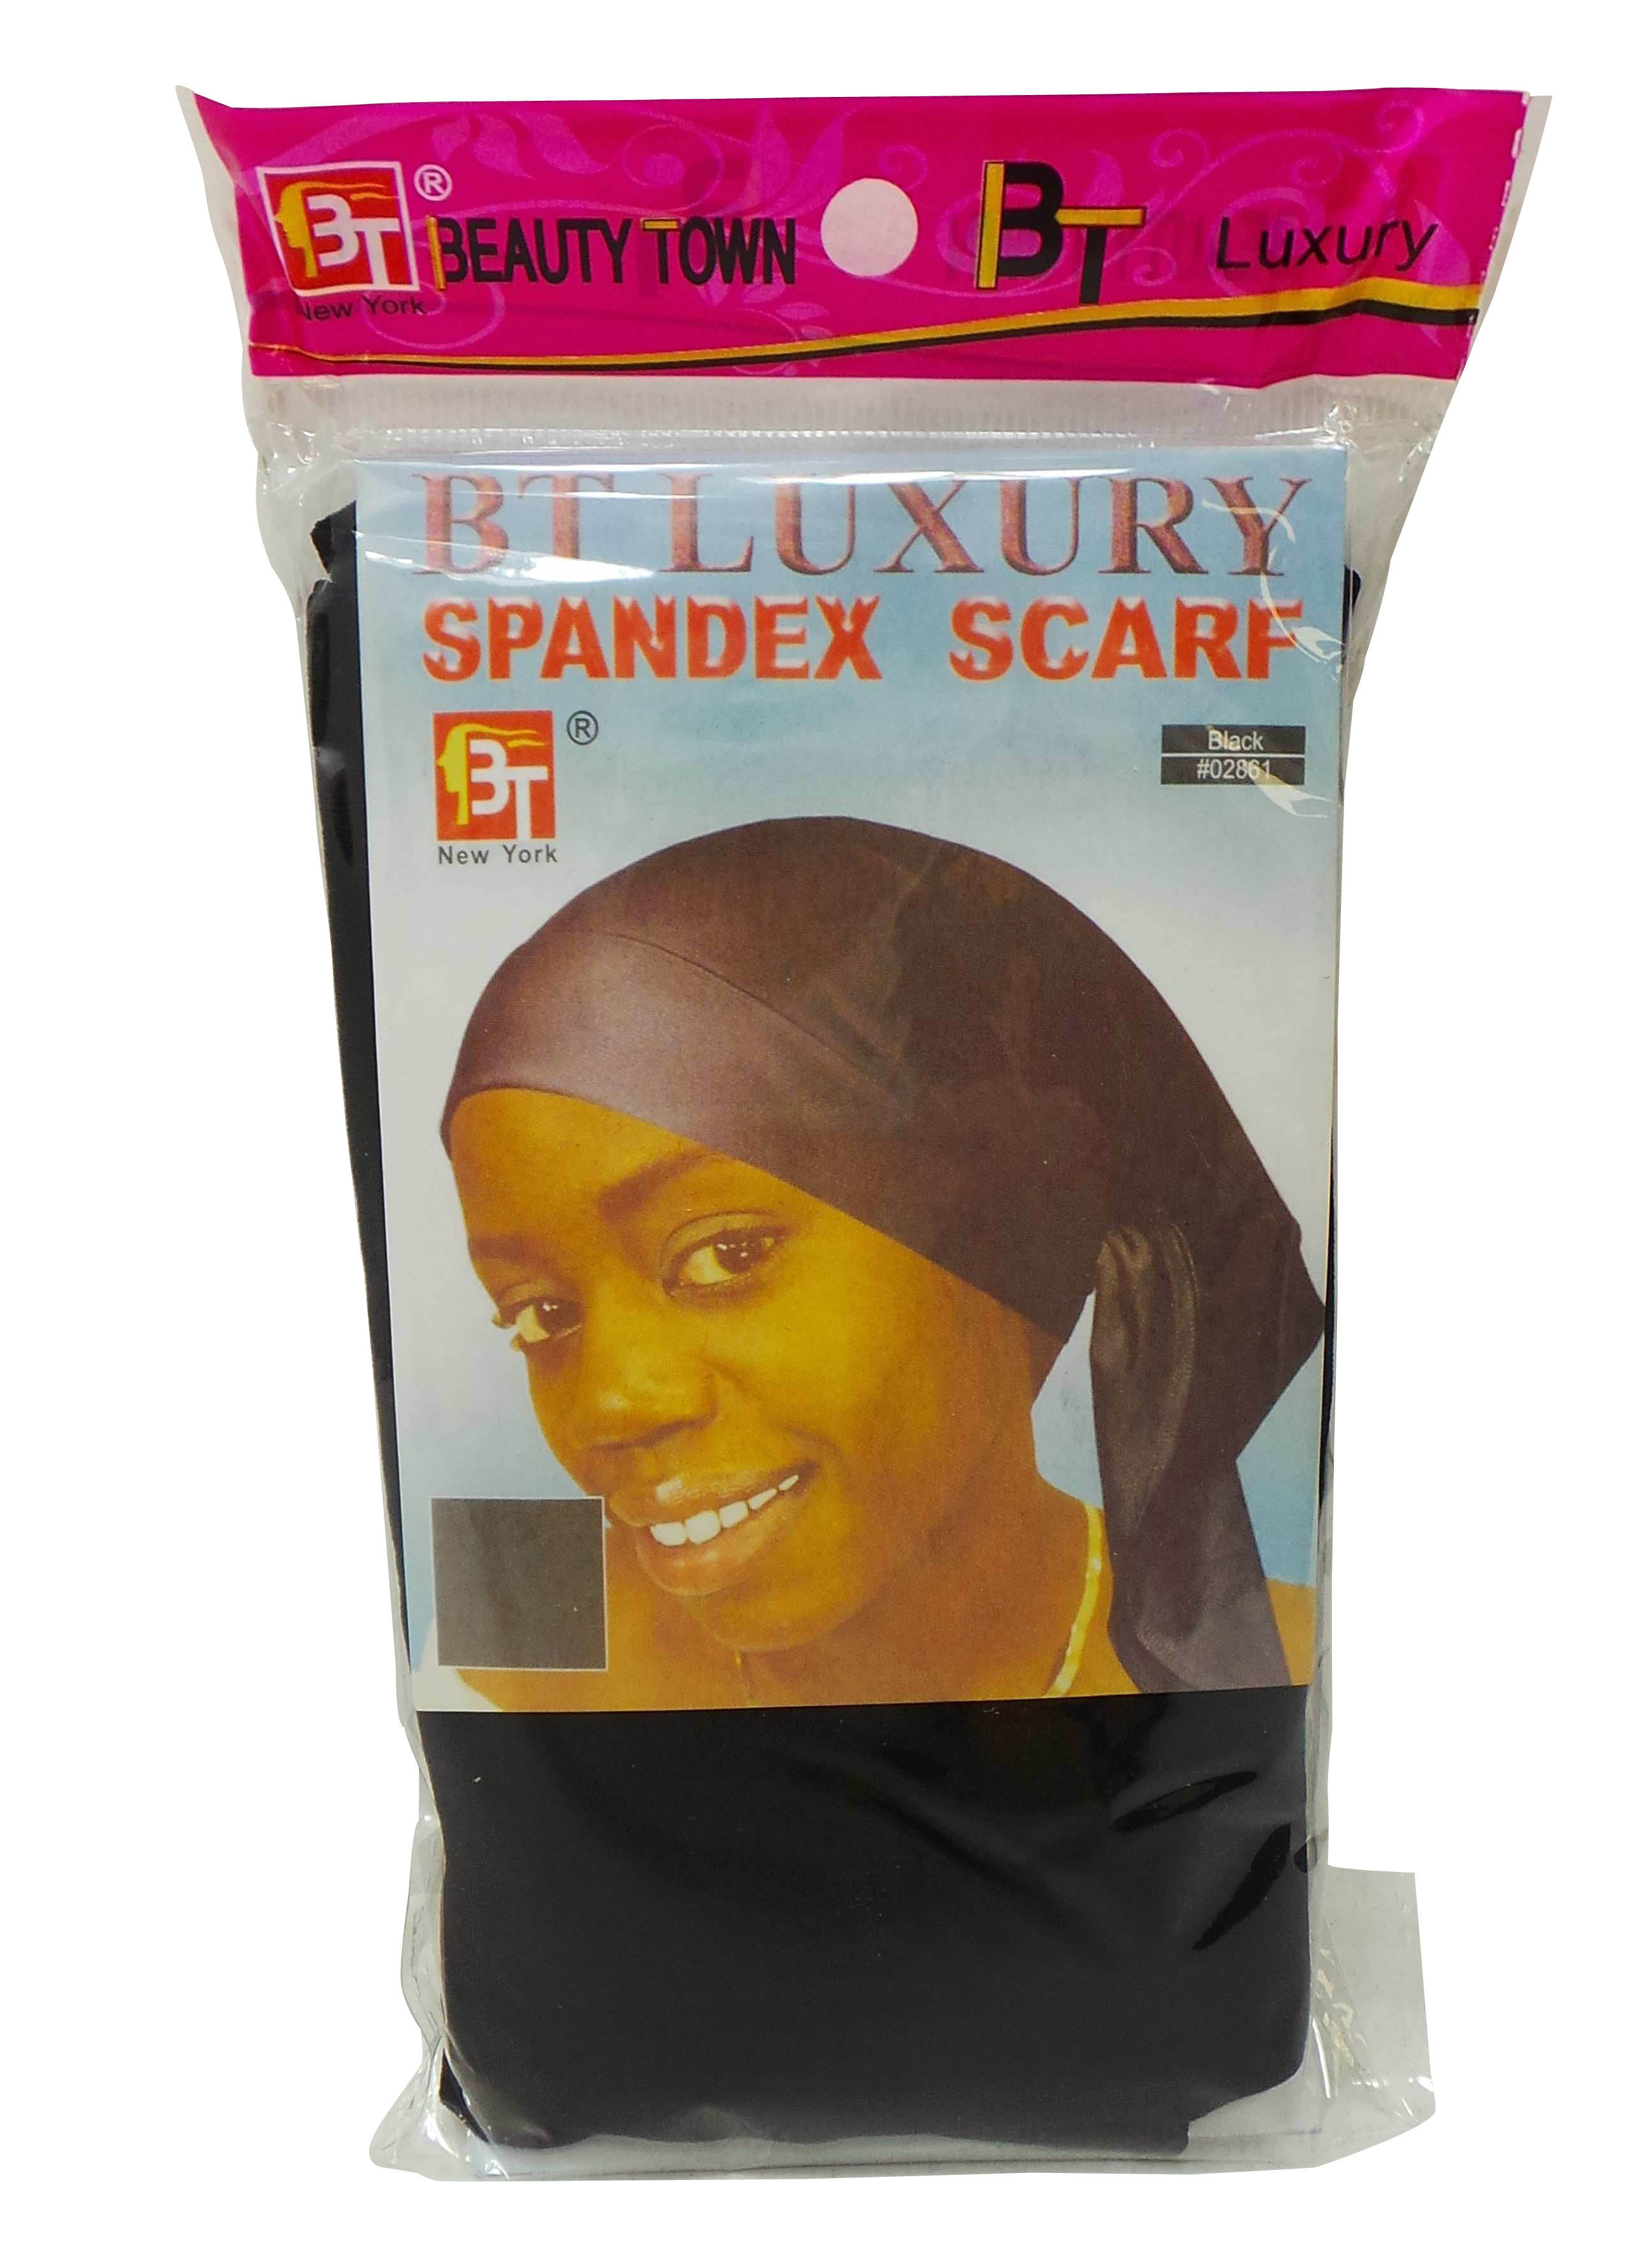 Wholesale Joblot of 100 Mixed Hair Covers Wraps Durags Caps Etc